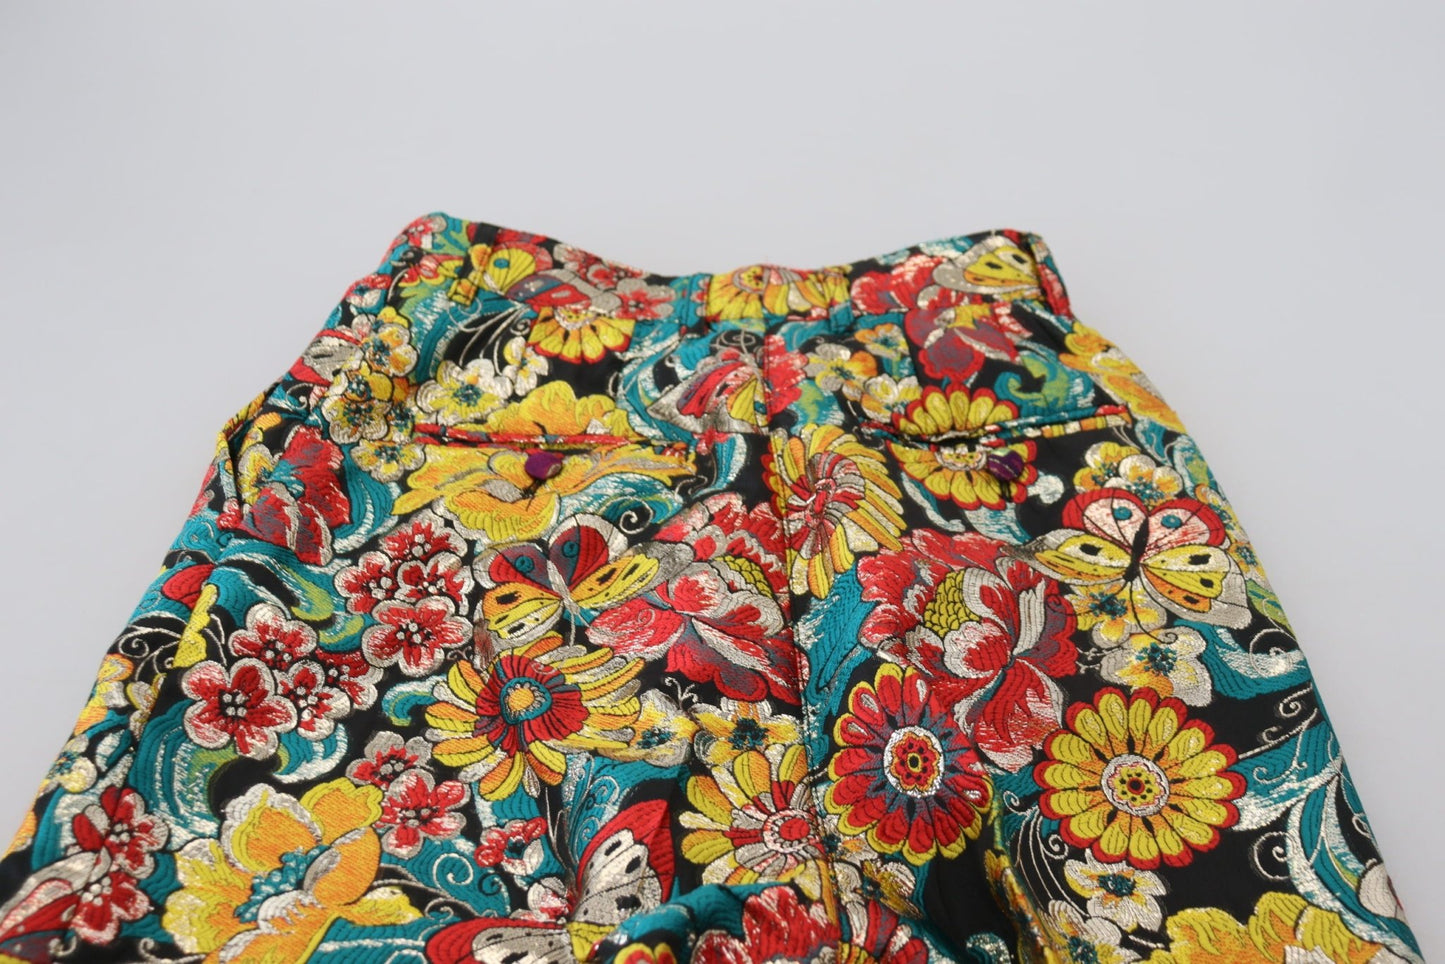 Dolce & Gabbana Multicolor Floral Women Flared Pants